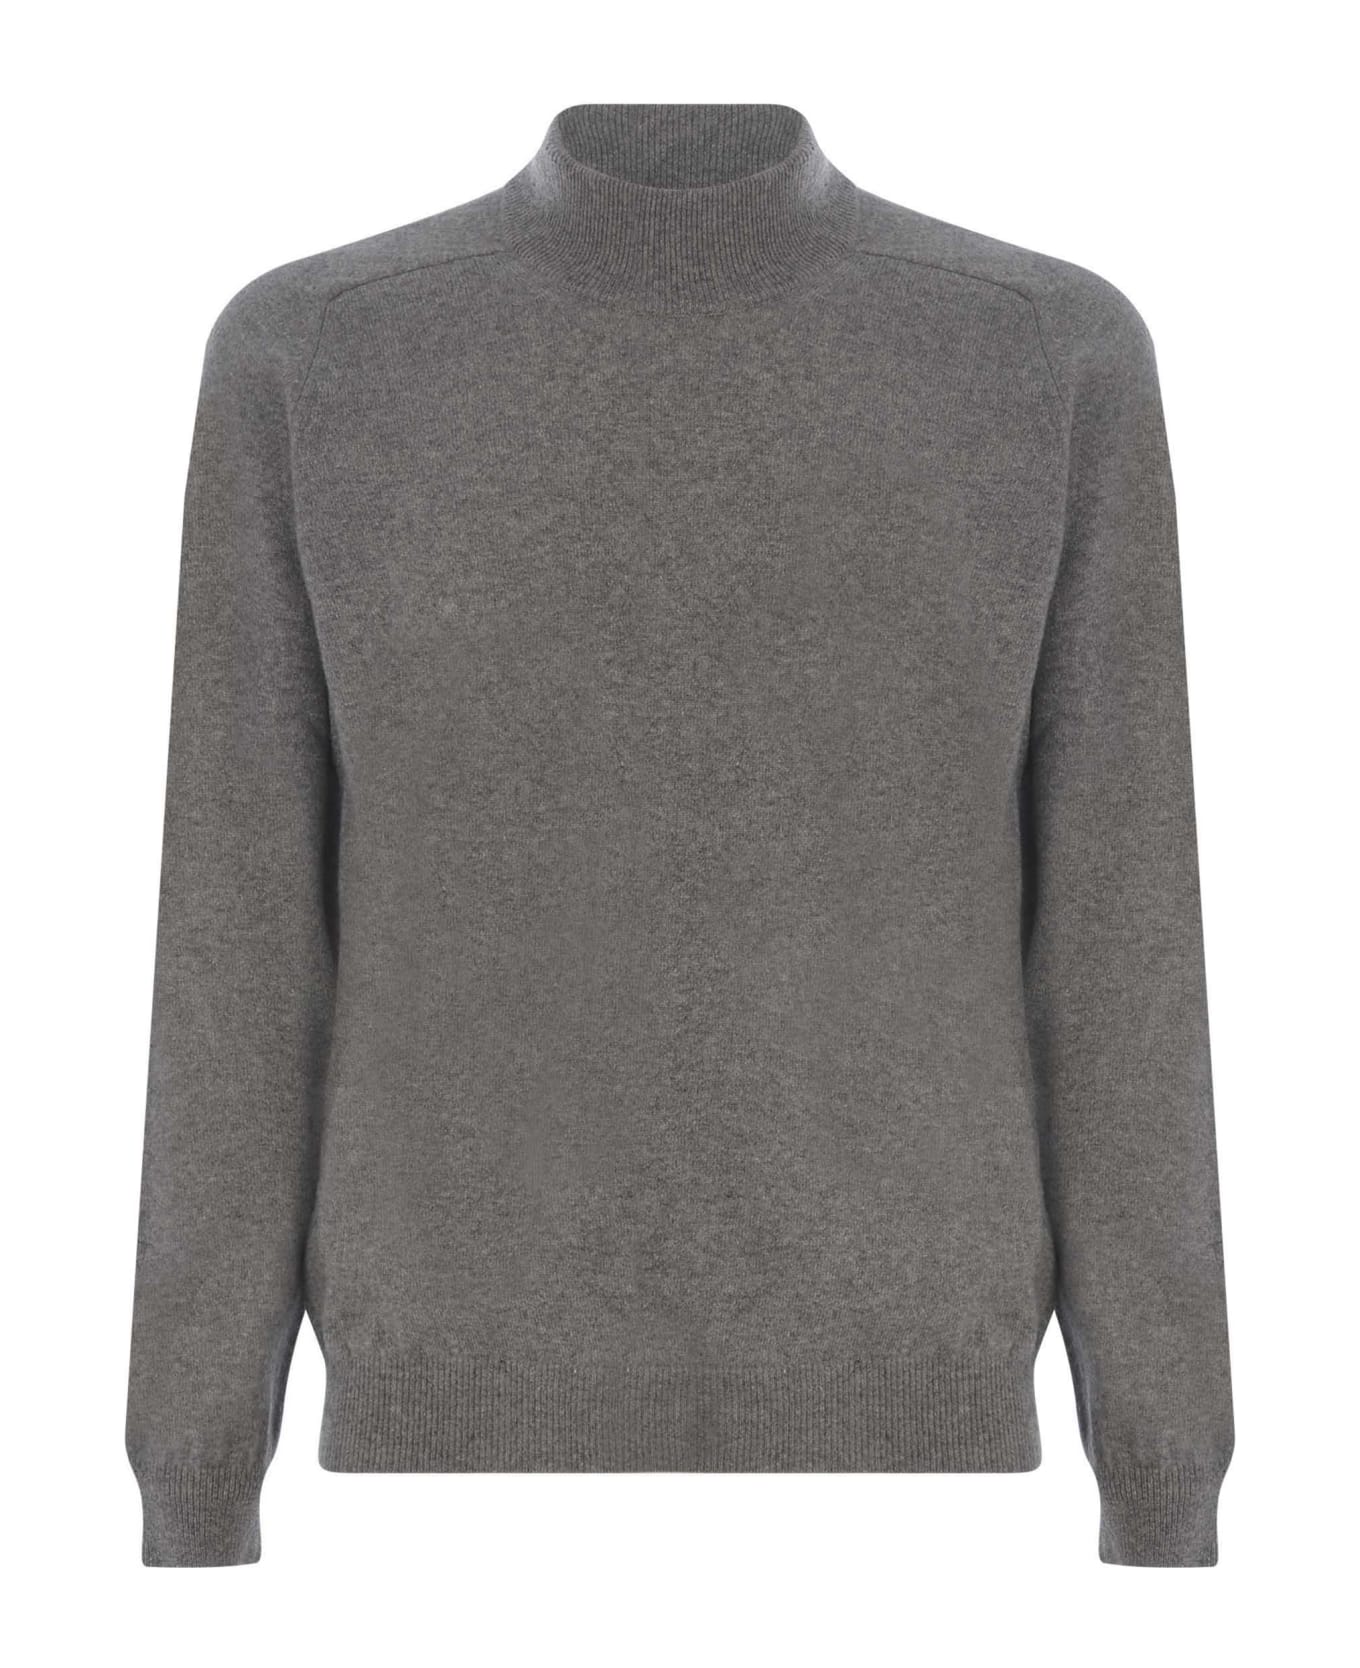 Jeordie's Sweater Jeodie's Made Of Extra Fine Wool - Grigio